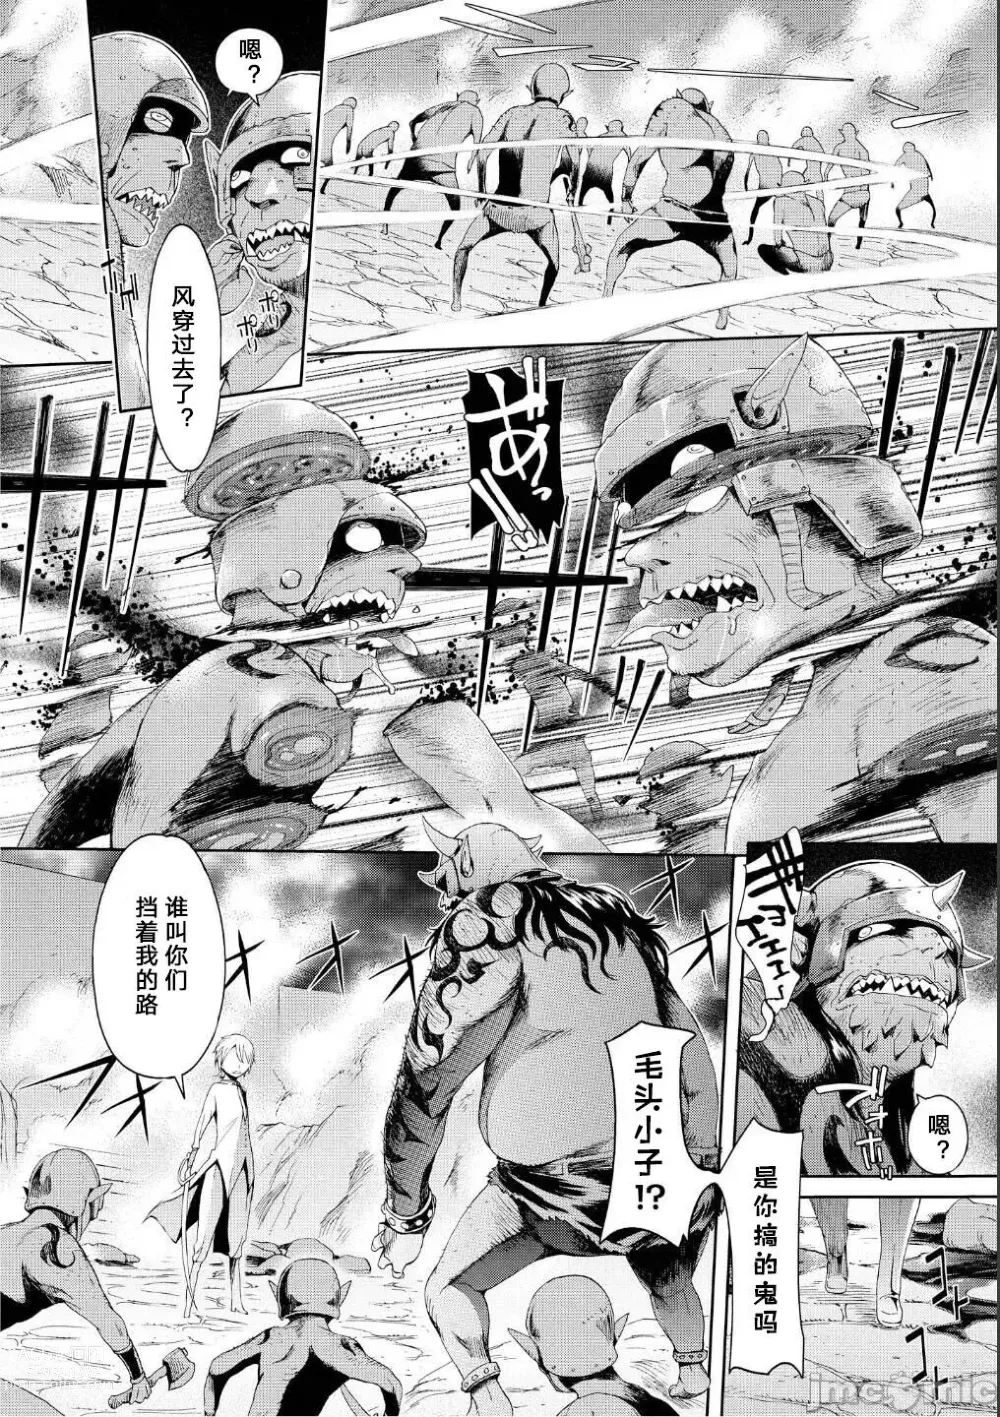 Page 8 of manga Sweet fruit